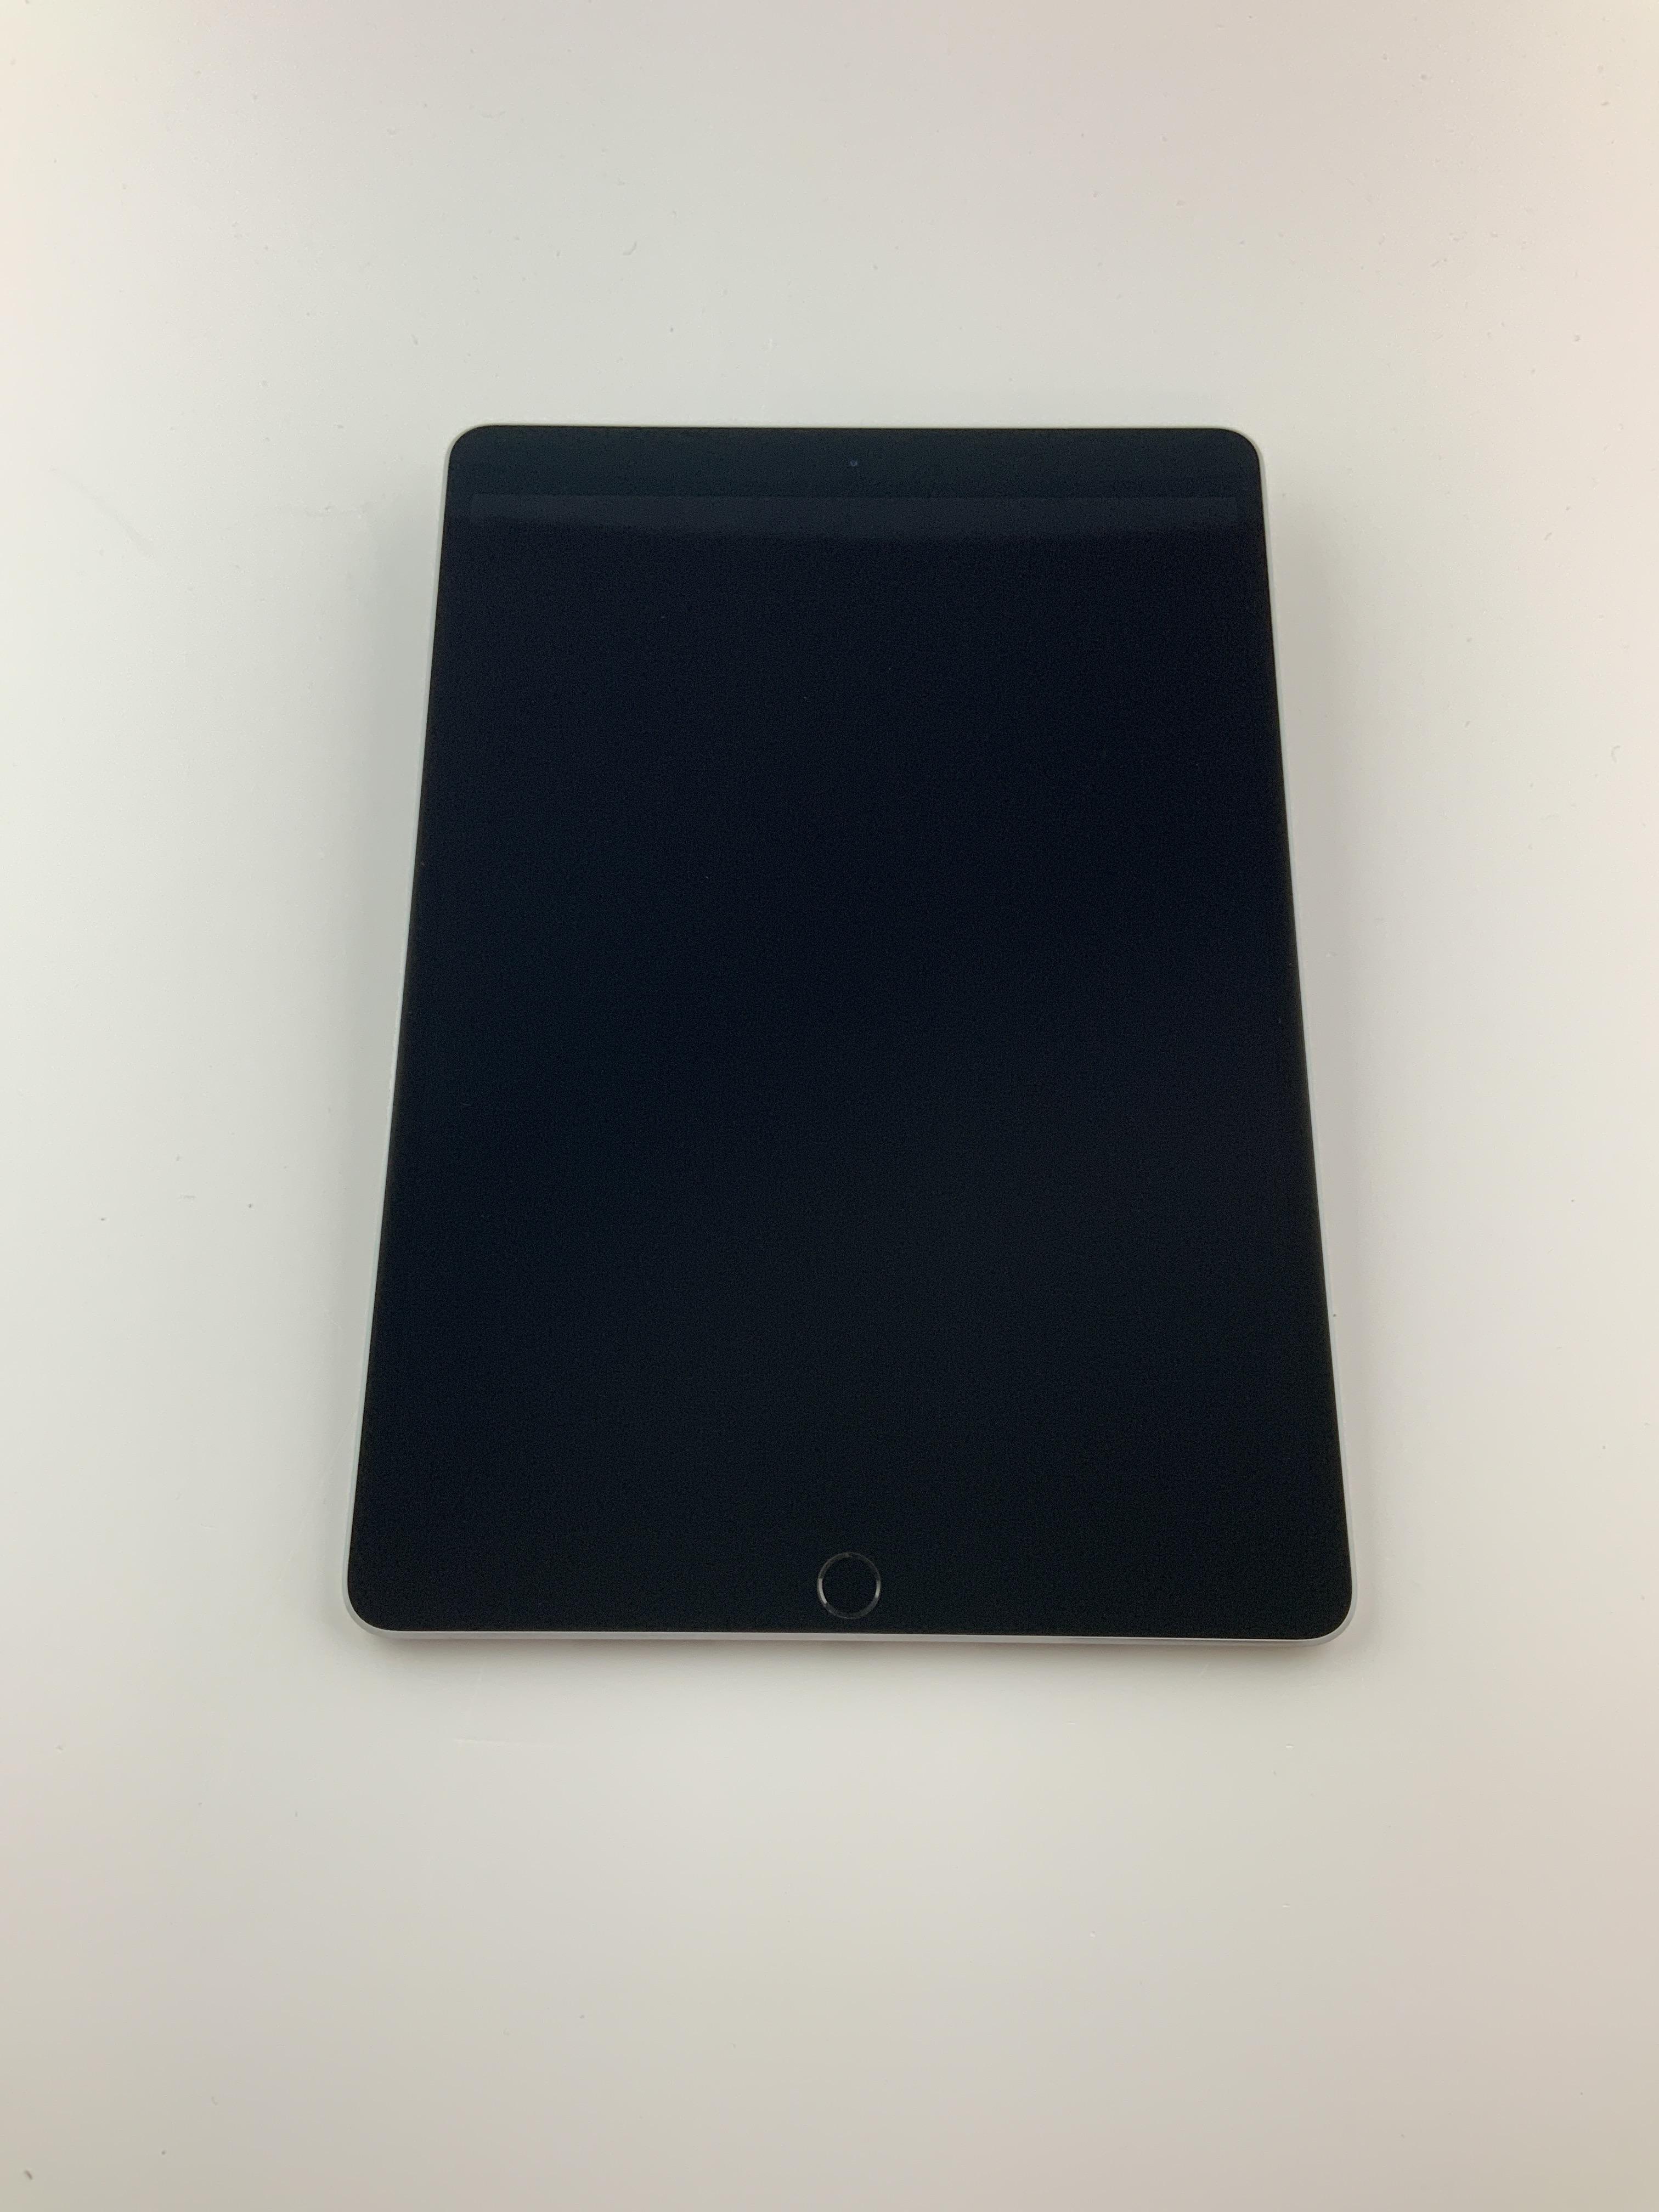 iPad Pro 10.5" Wi-Fi + Cellular 512GB, 512GB, Space Gray, bild 1